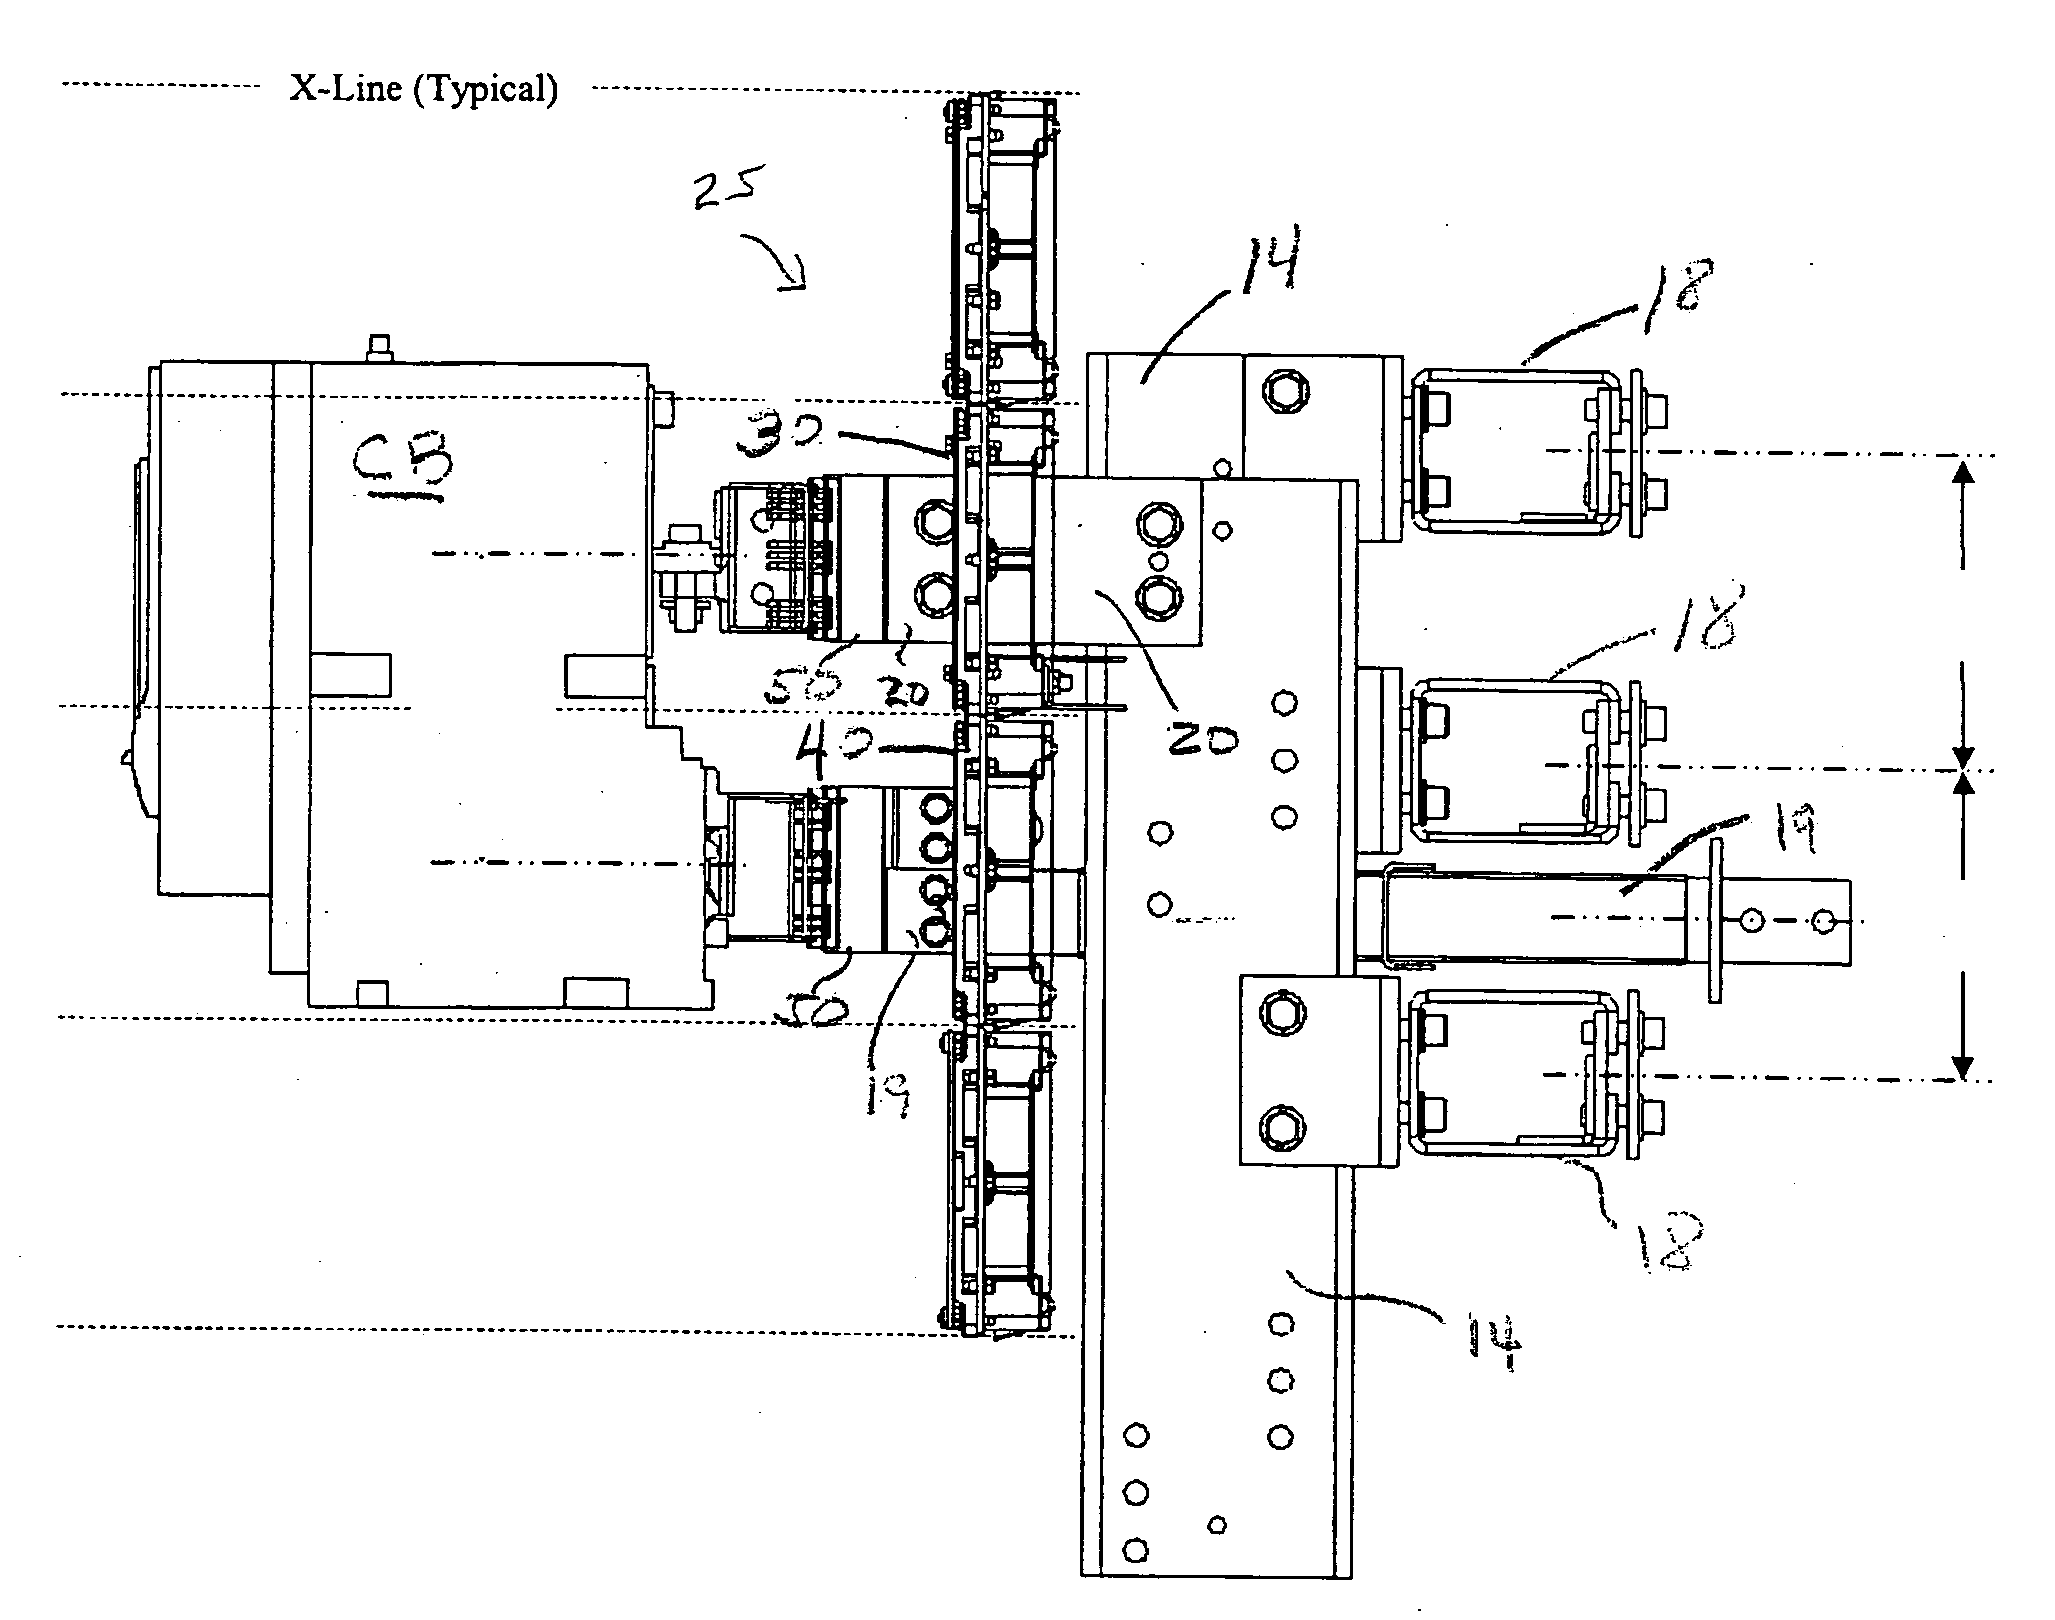 Modular arrangement of components of electrical equipment enclosure